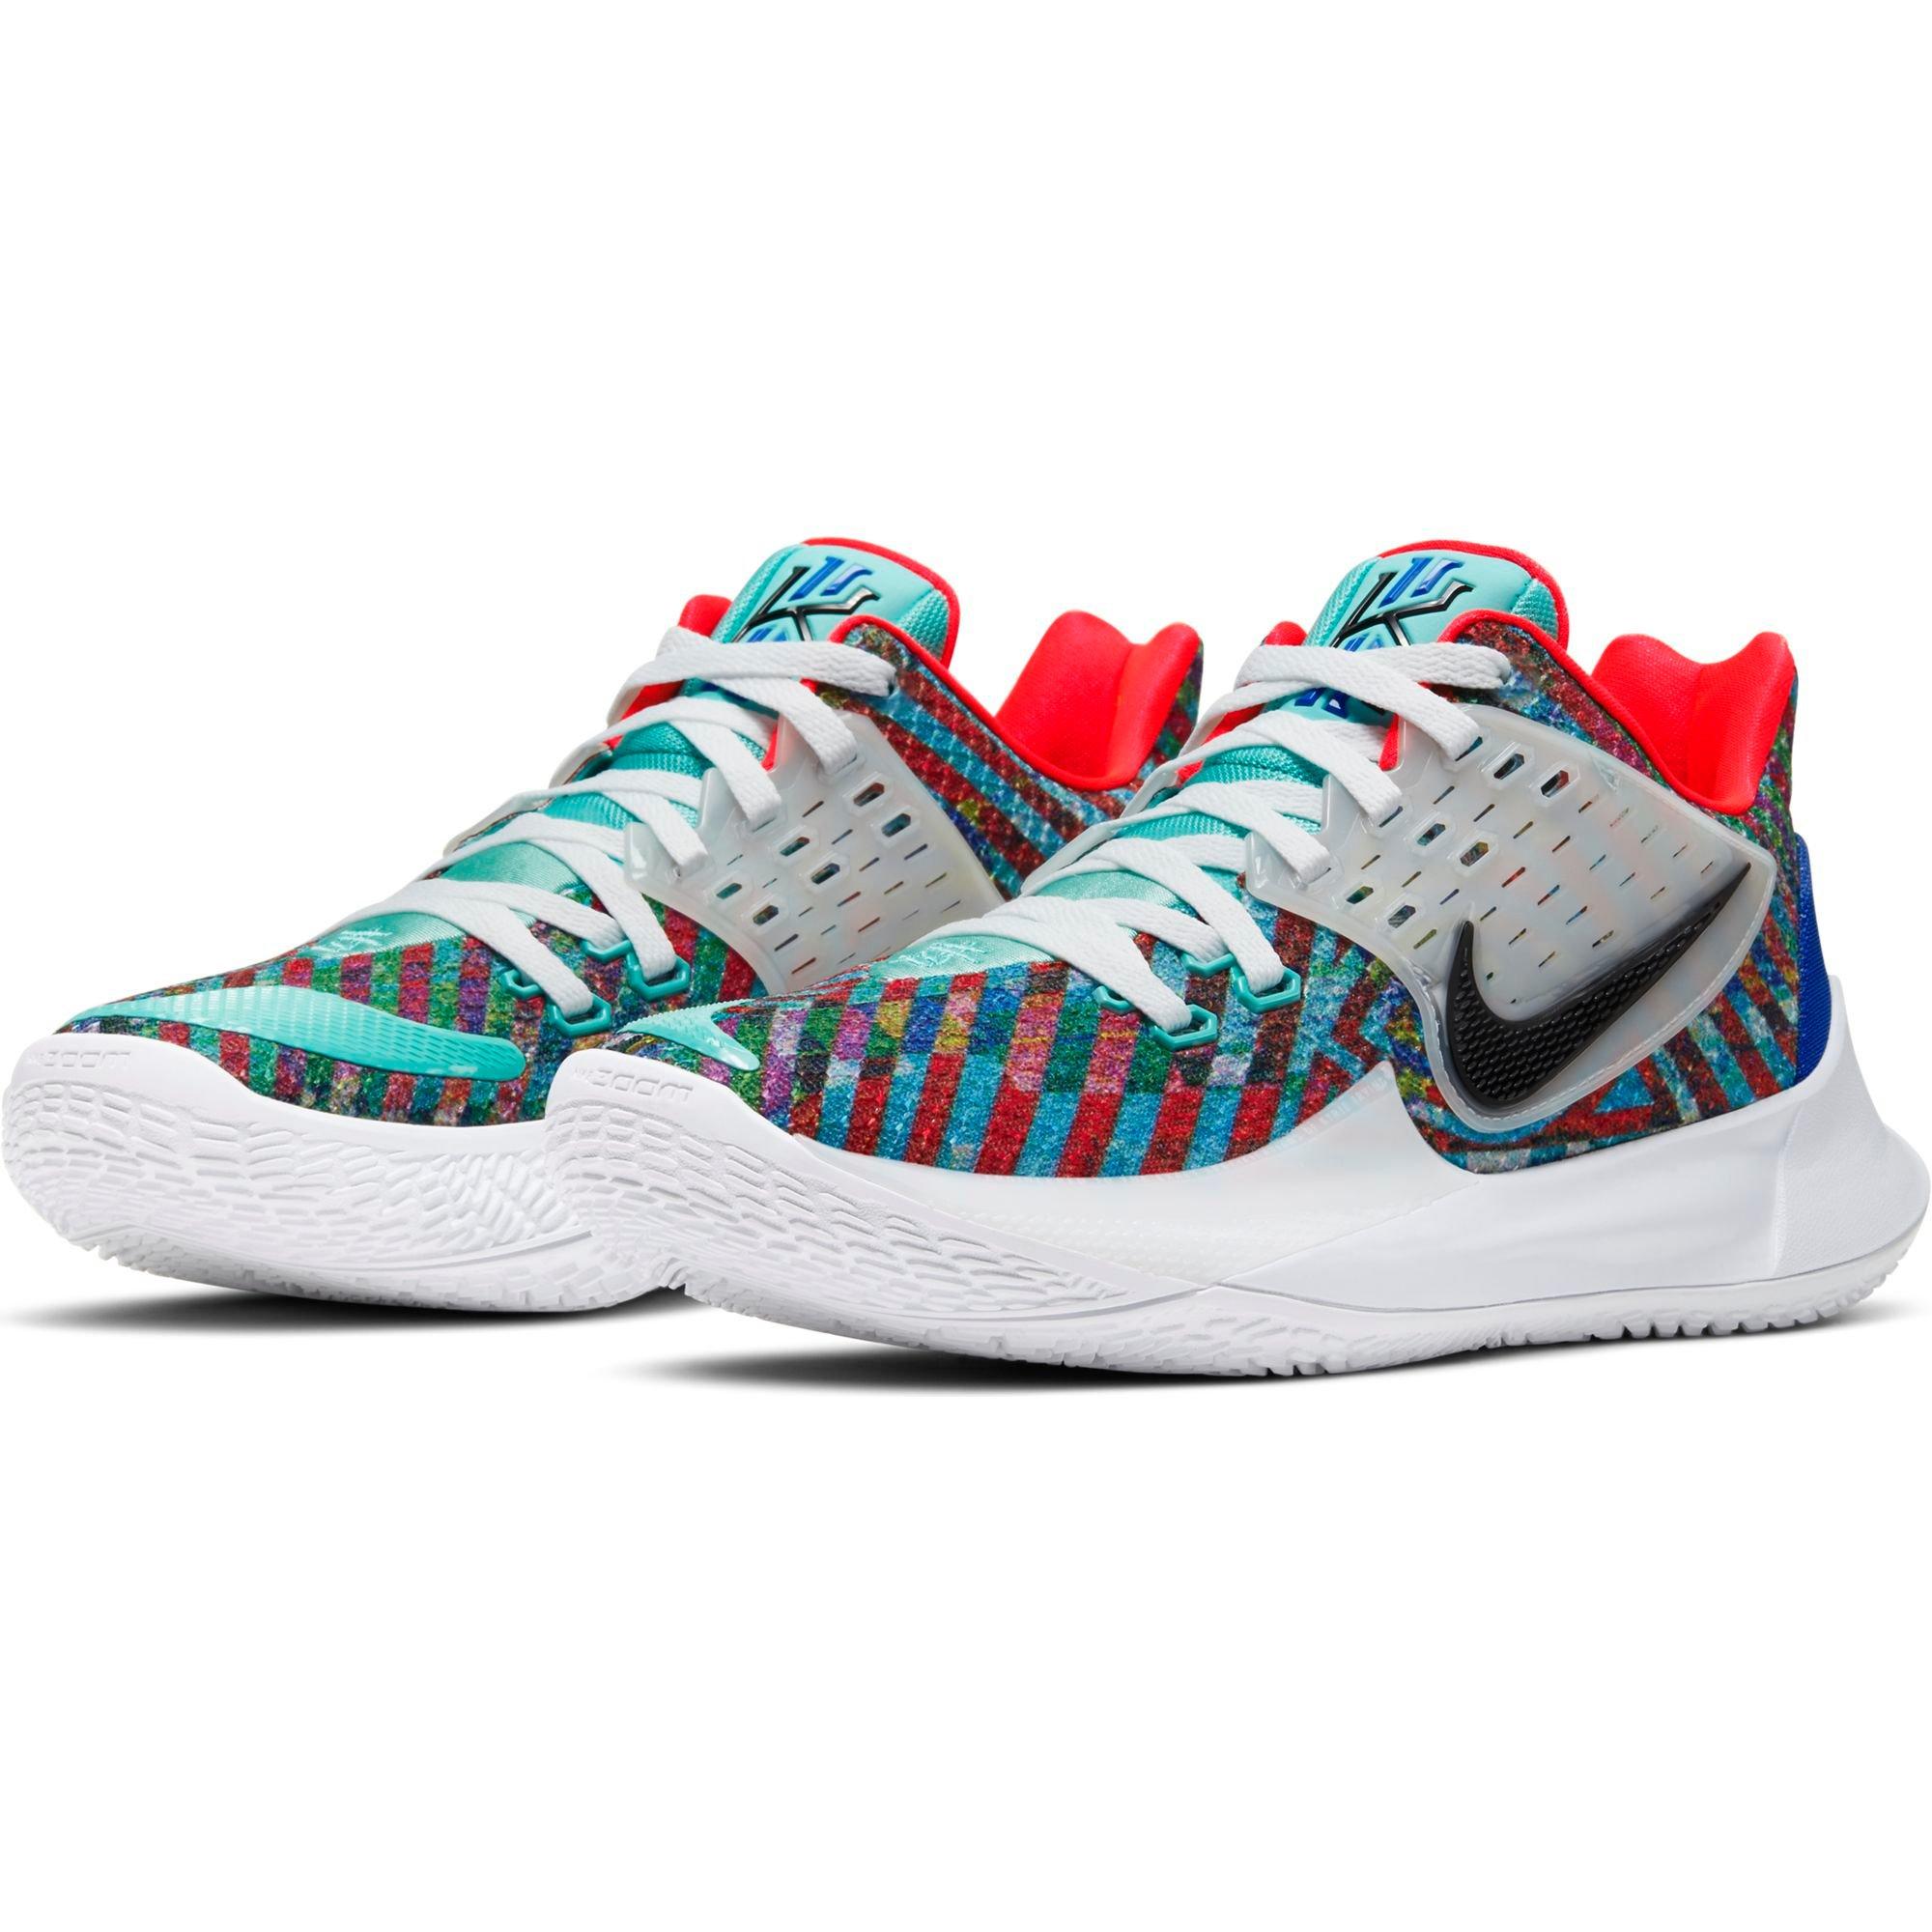 Nike Vapor X Kyrie 5 Hot Lava Release Date SneakerNews